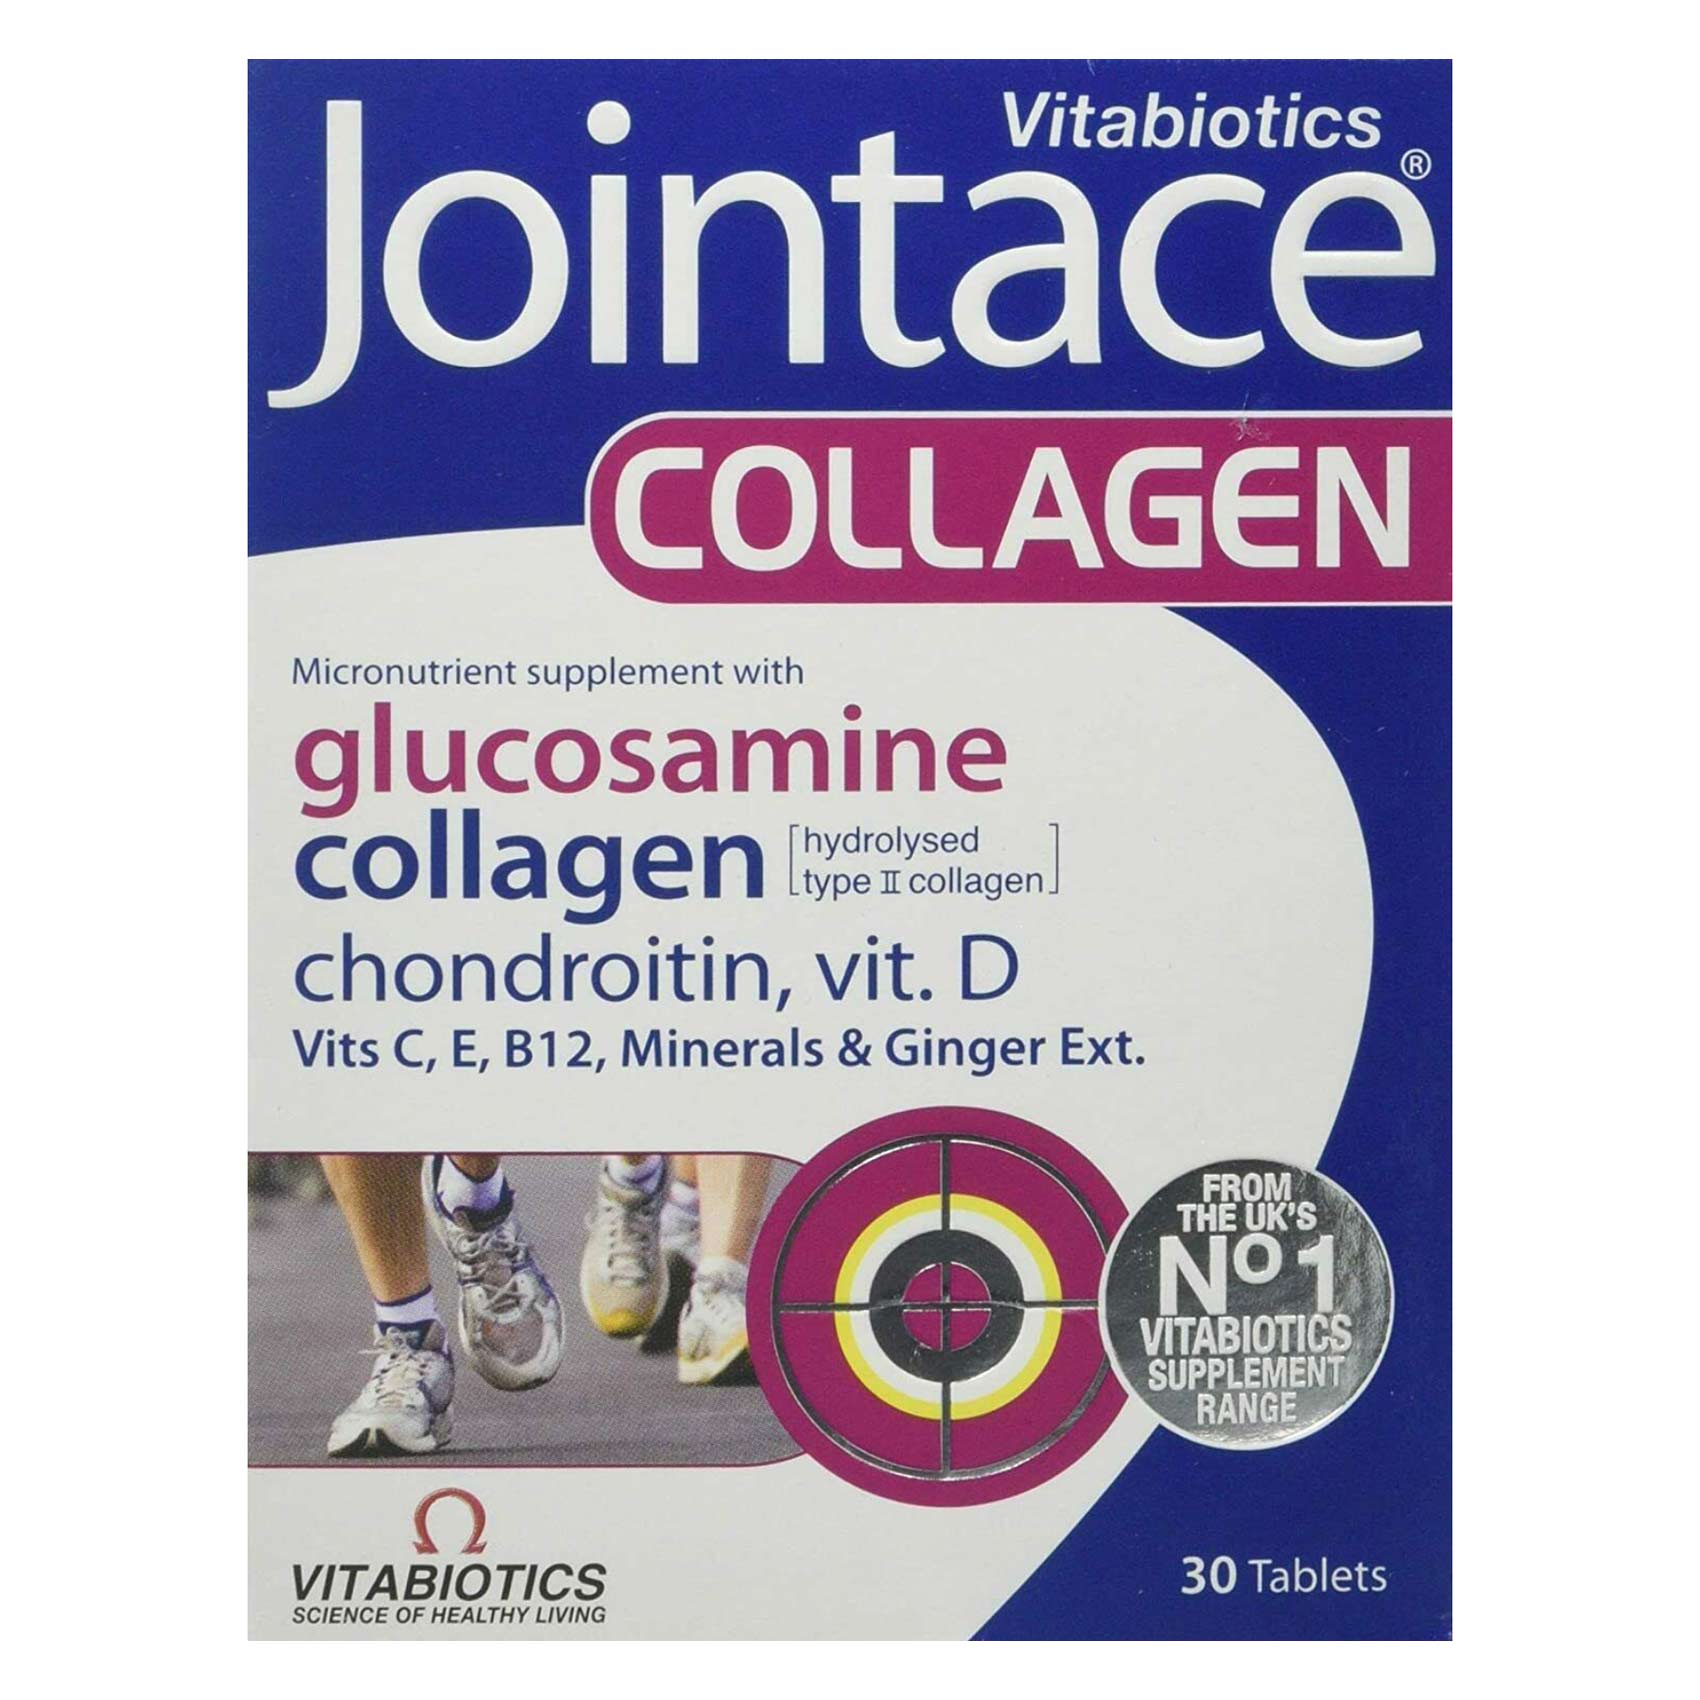 Vitabiotics Jointace Collagen Glucosamine supplements Supplements 30 Tablets